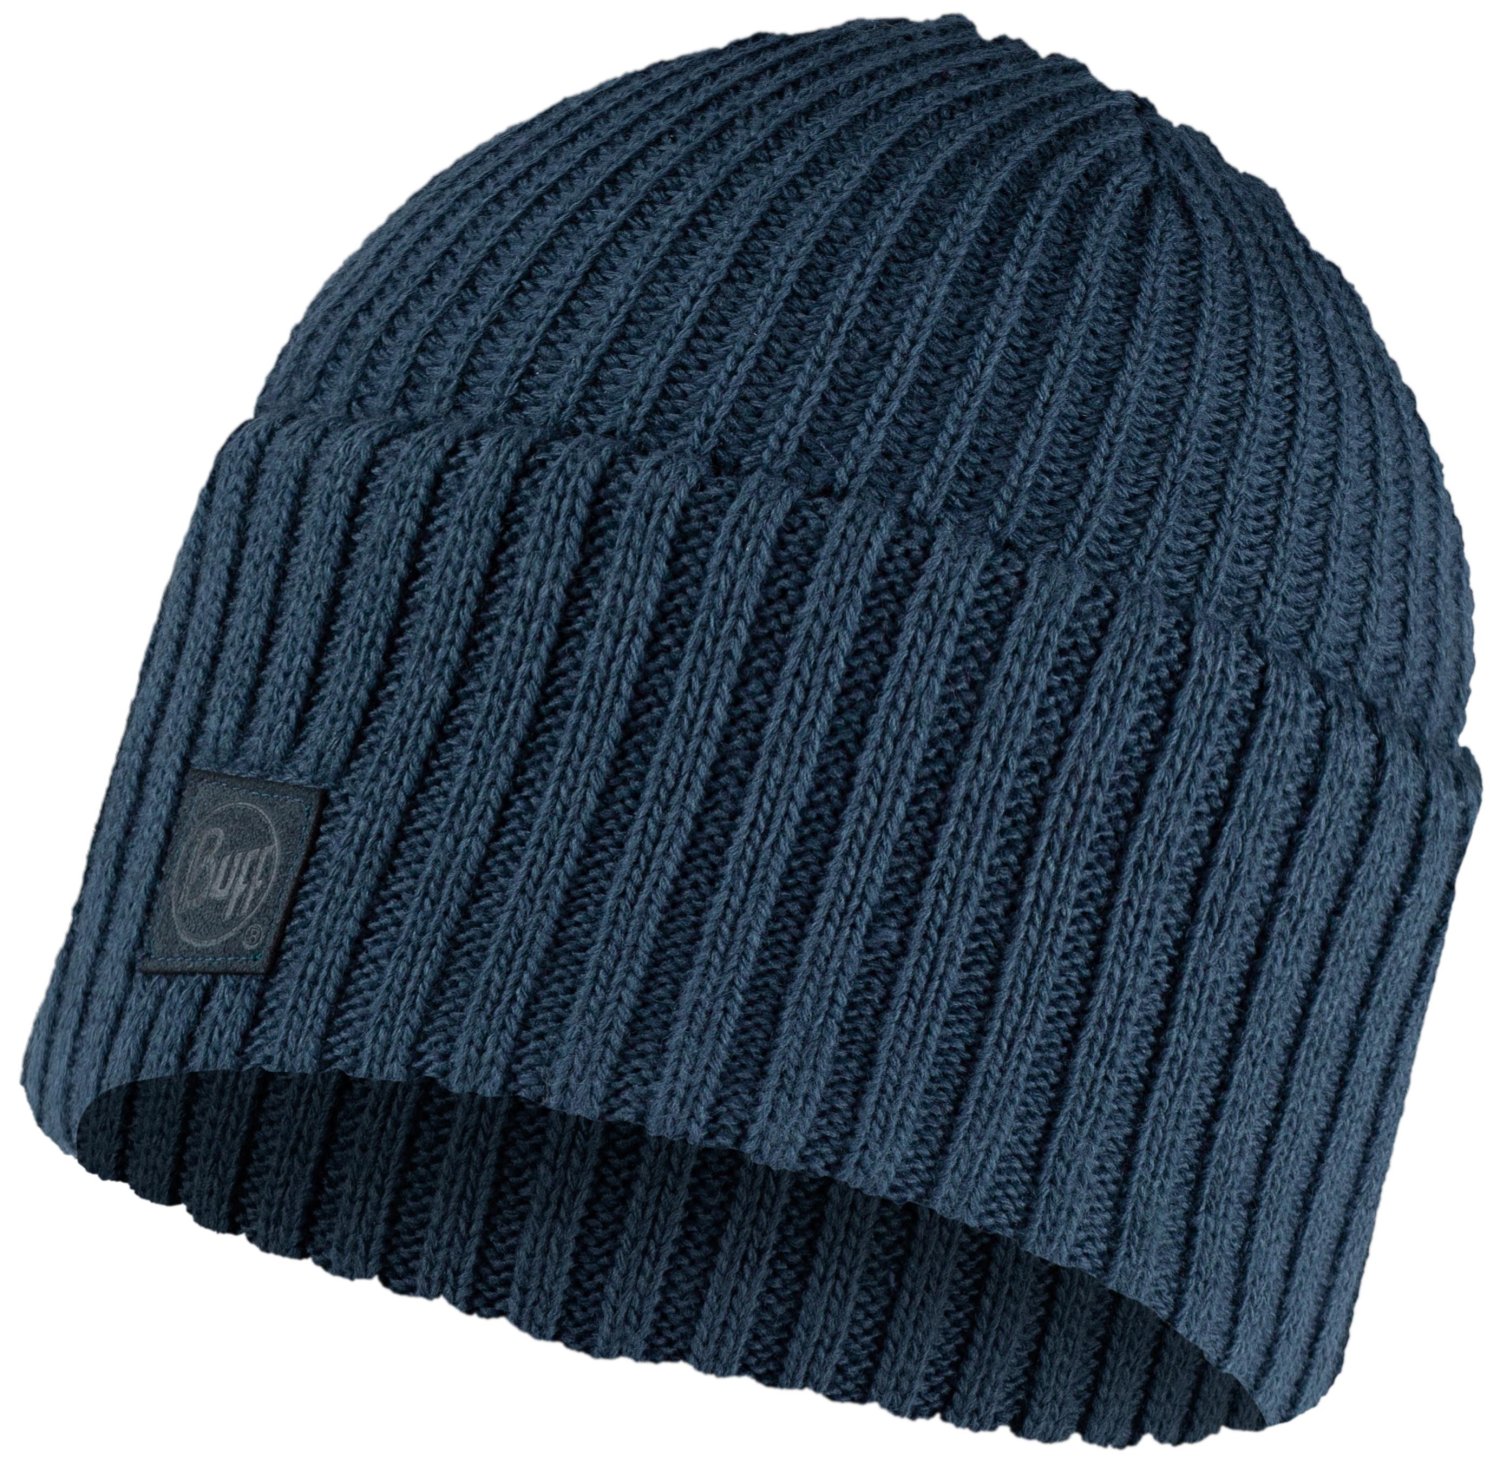 Шапка Buff Knitted Hat Rutger Steelblue, US:One size, 117845.701.10.00 купить на ЖДБЗ.ру